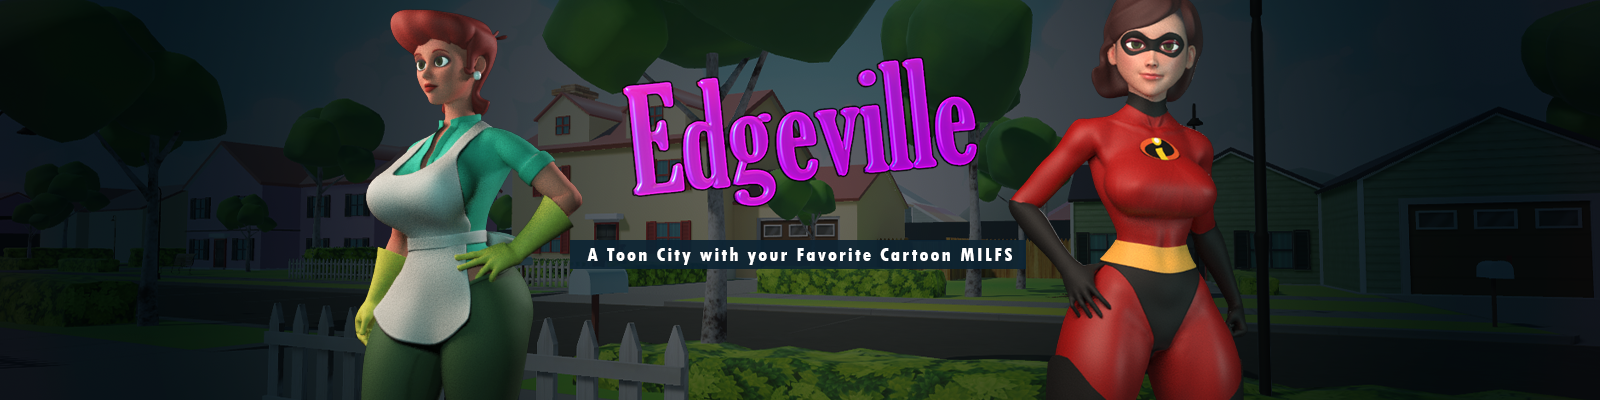 Edgeville [Game]